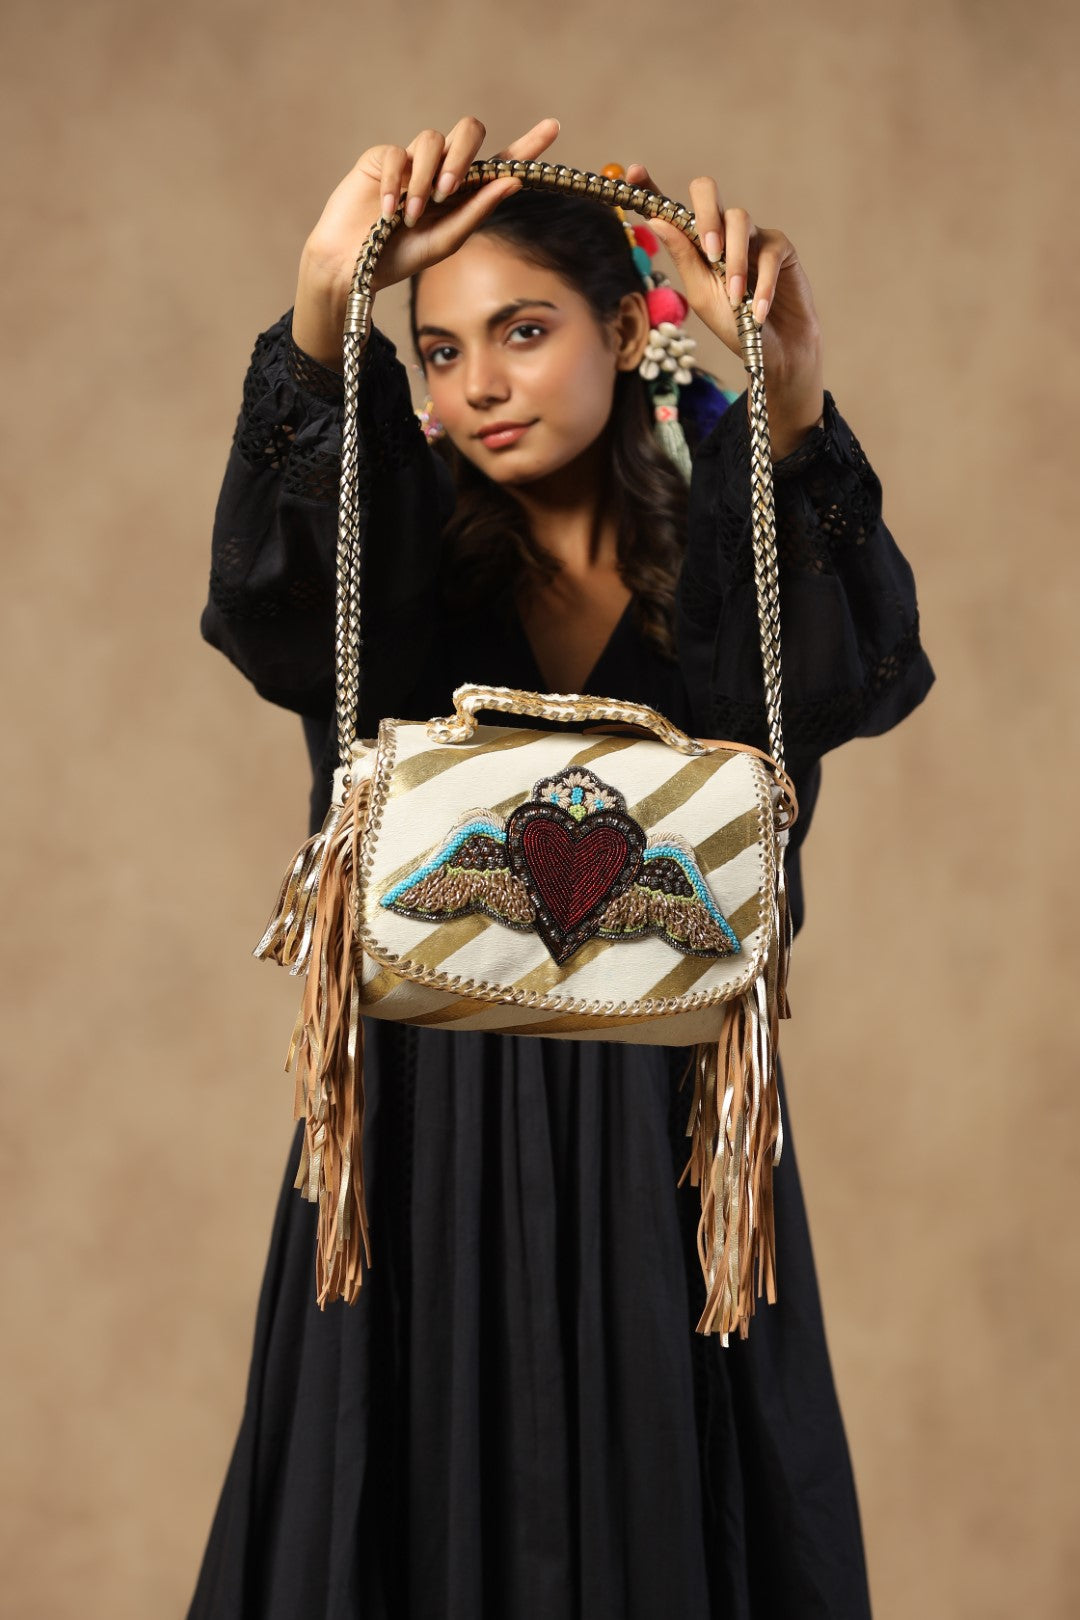 Women Handmade Leather Shoulder Bag With Leather Fringes